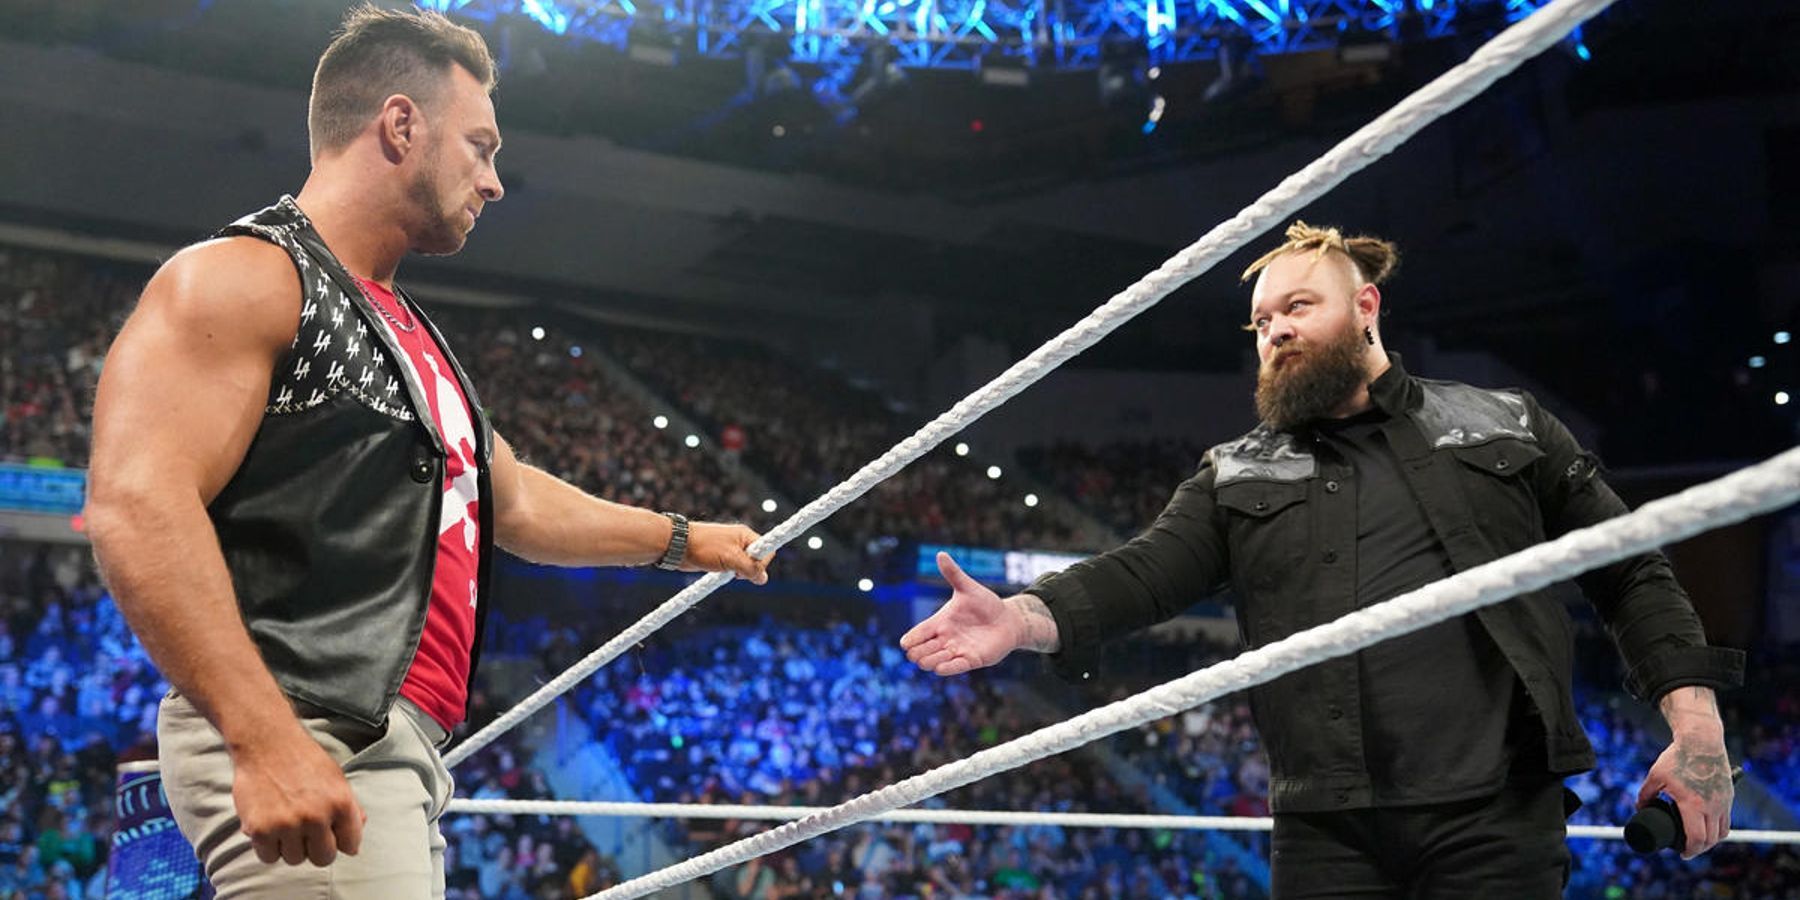 Bray Wyatt and LA Knight on SmackDown